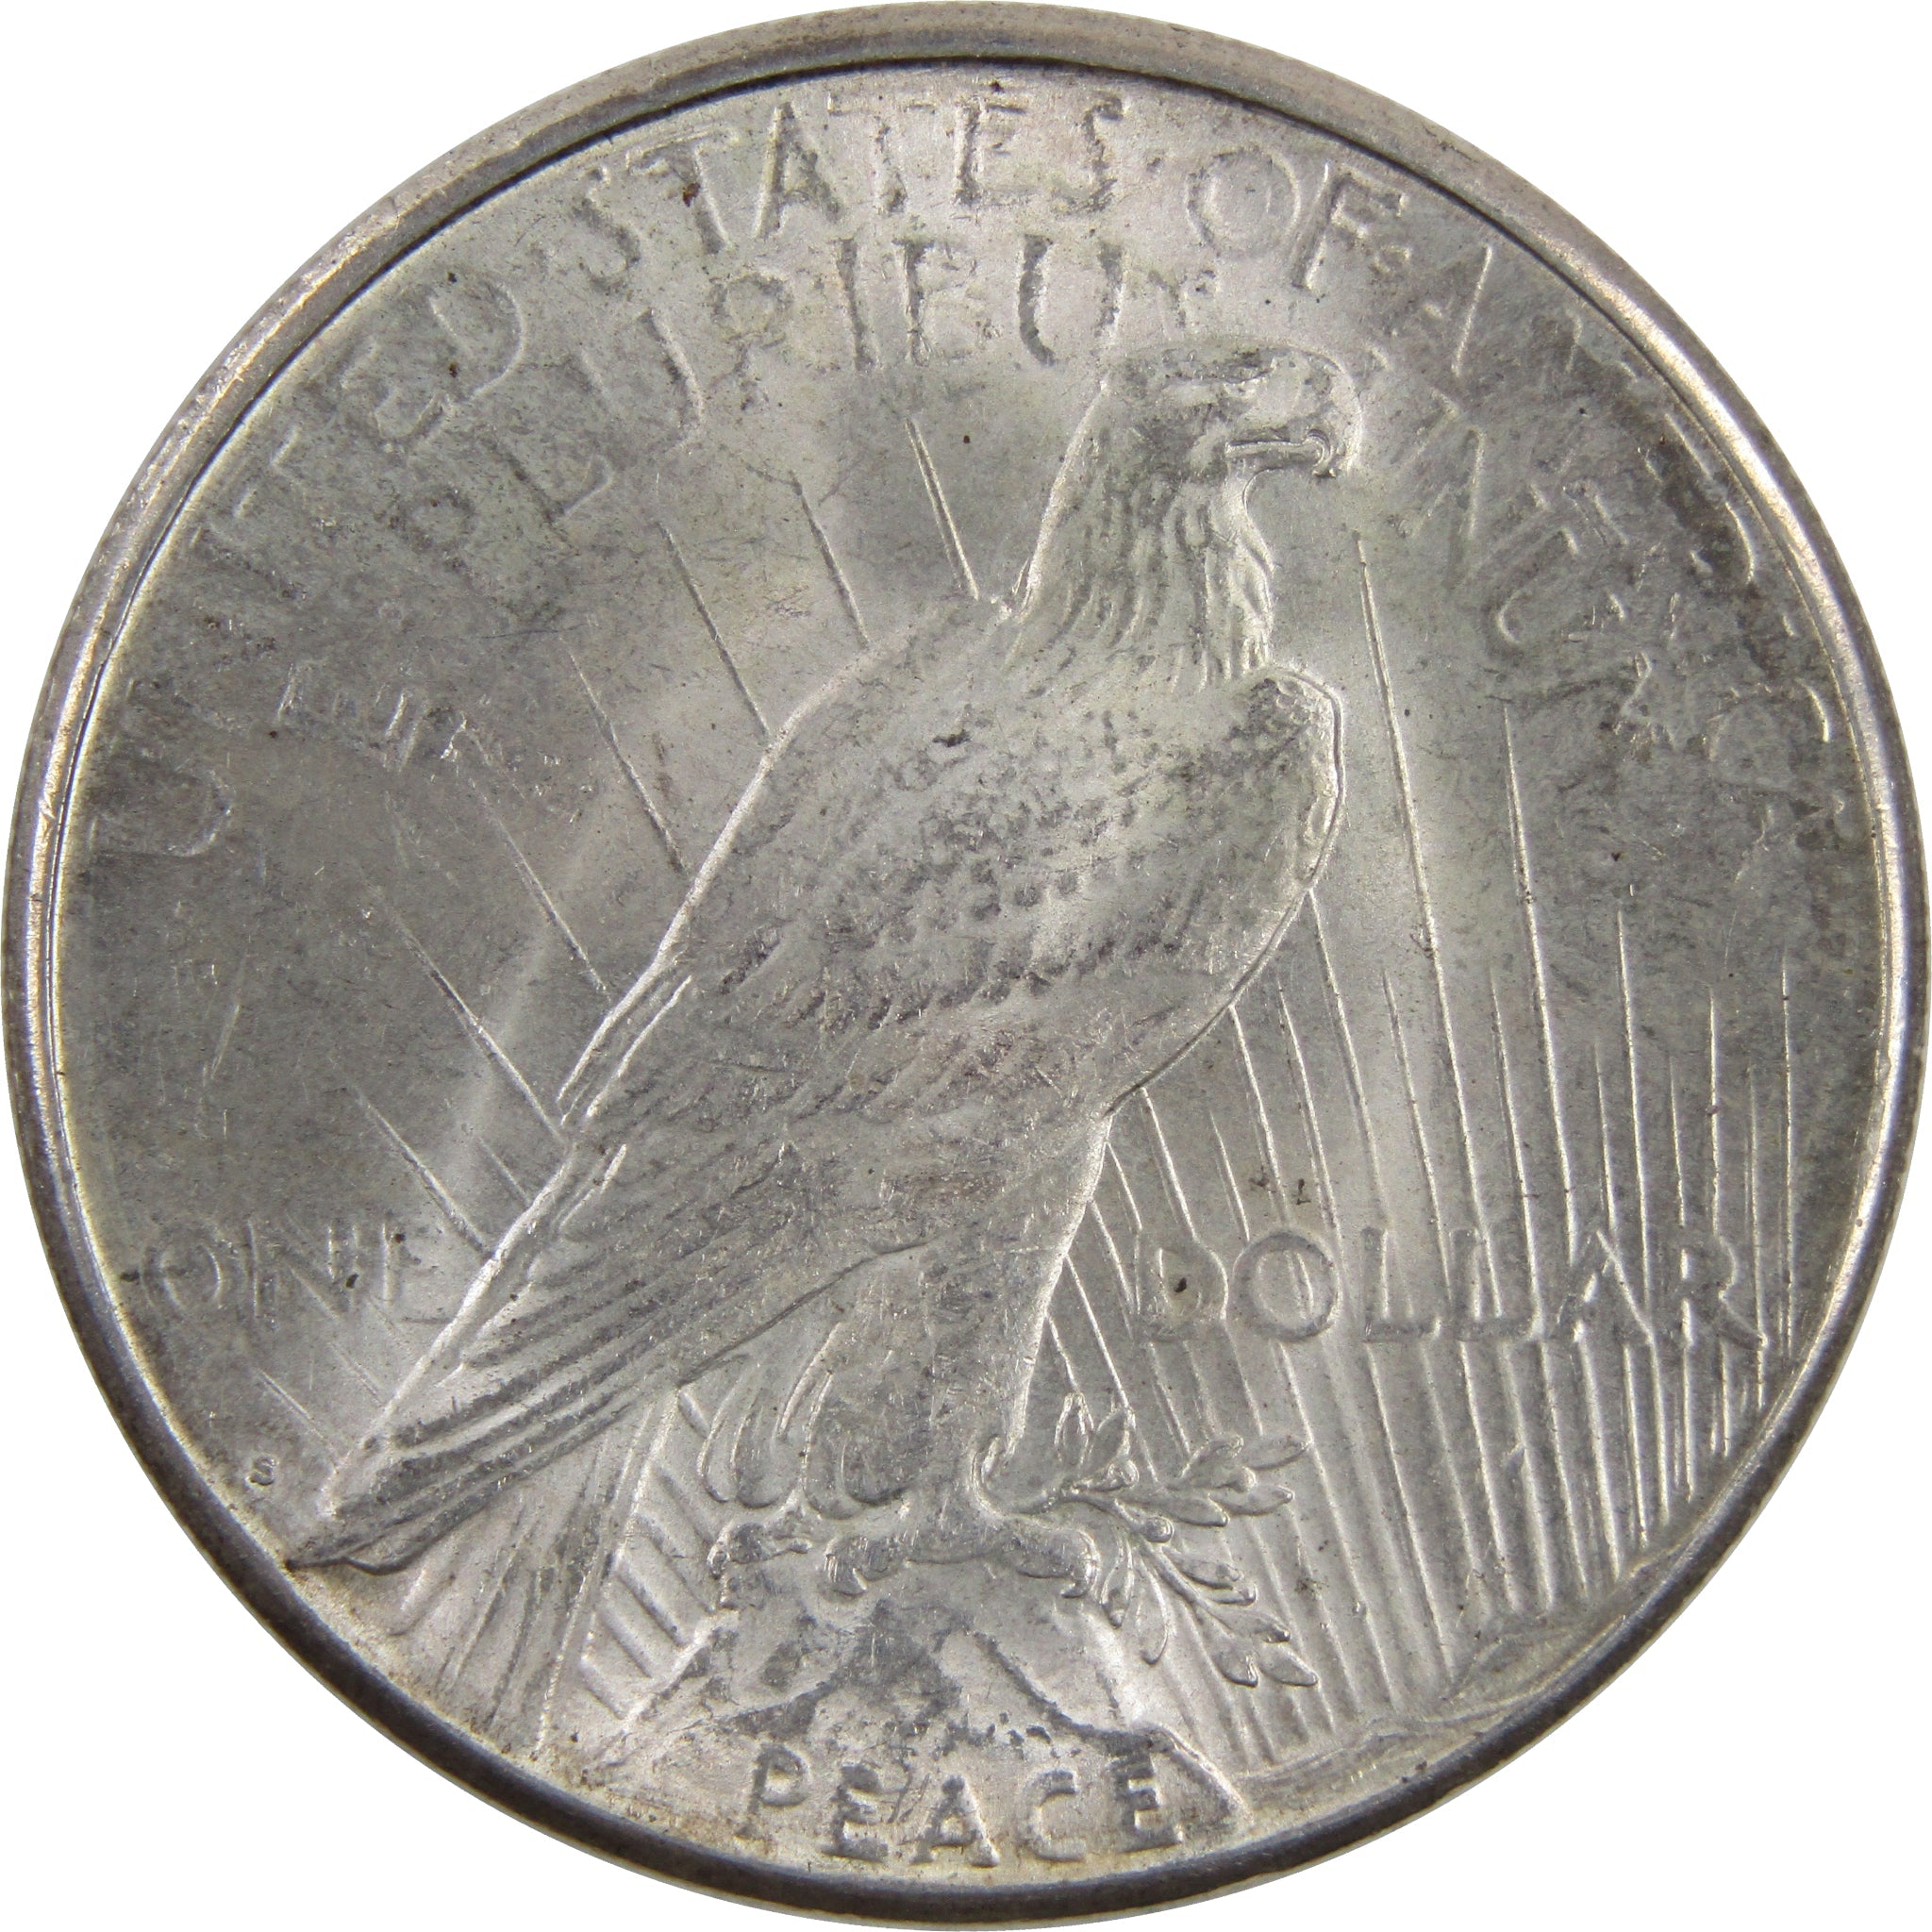 1923 S Peace Dollar Uncirculated Silver $1 Coin SKU:I2440